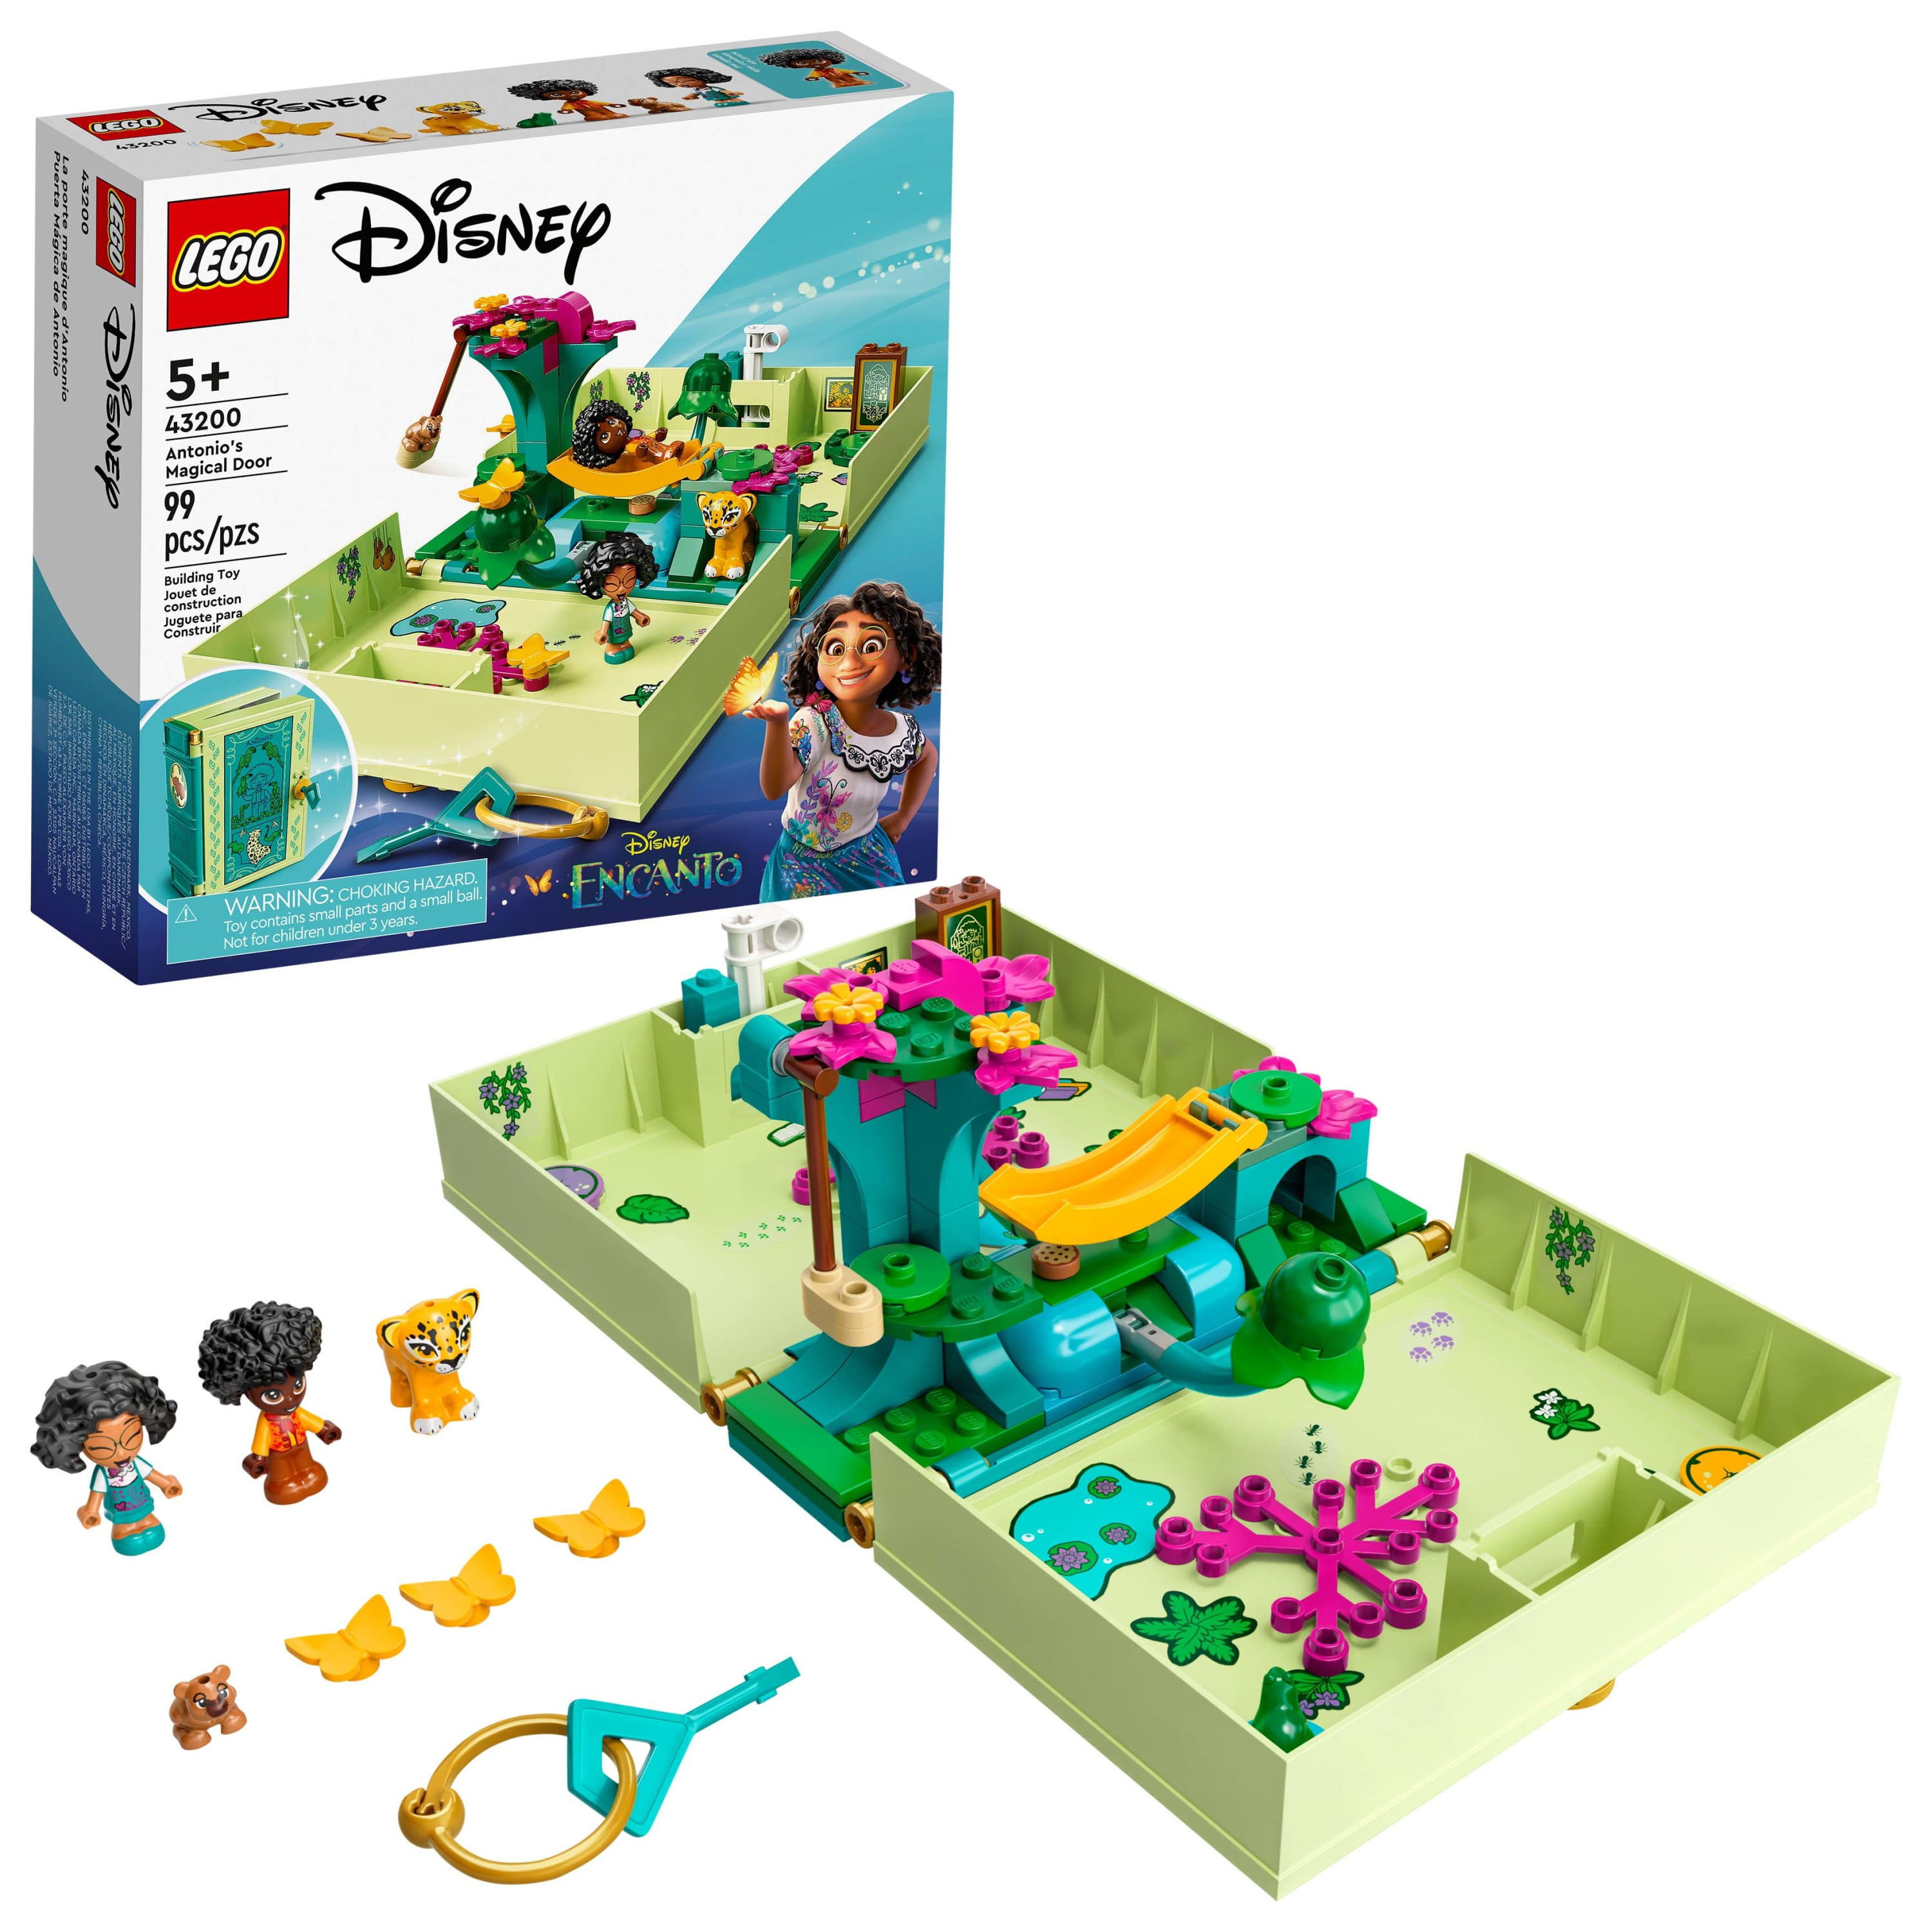 LEGO Disney Encanto Antonio’s Magical Door 43200 Building Kit; A Great Construction Toy for Kids’ Imaginations (99 pieces)